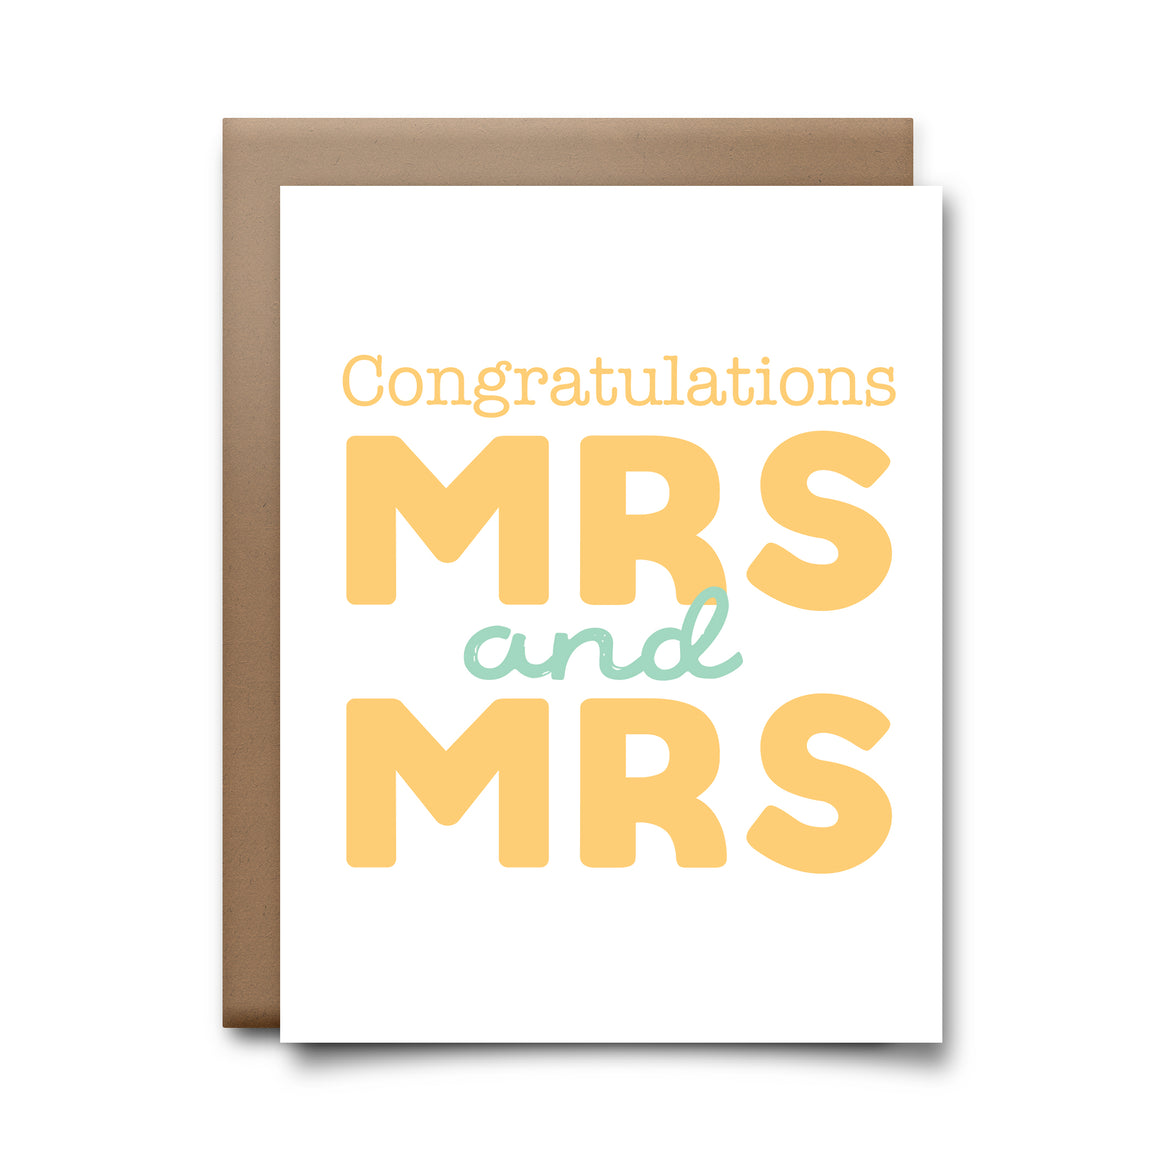 congrats mrs mrs  | greeting card